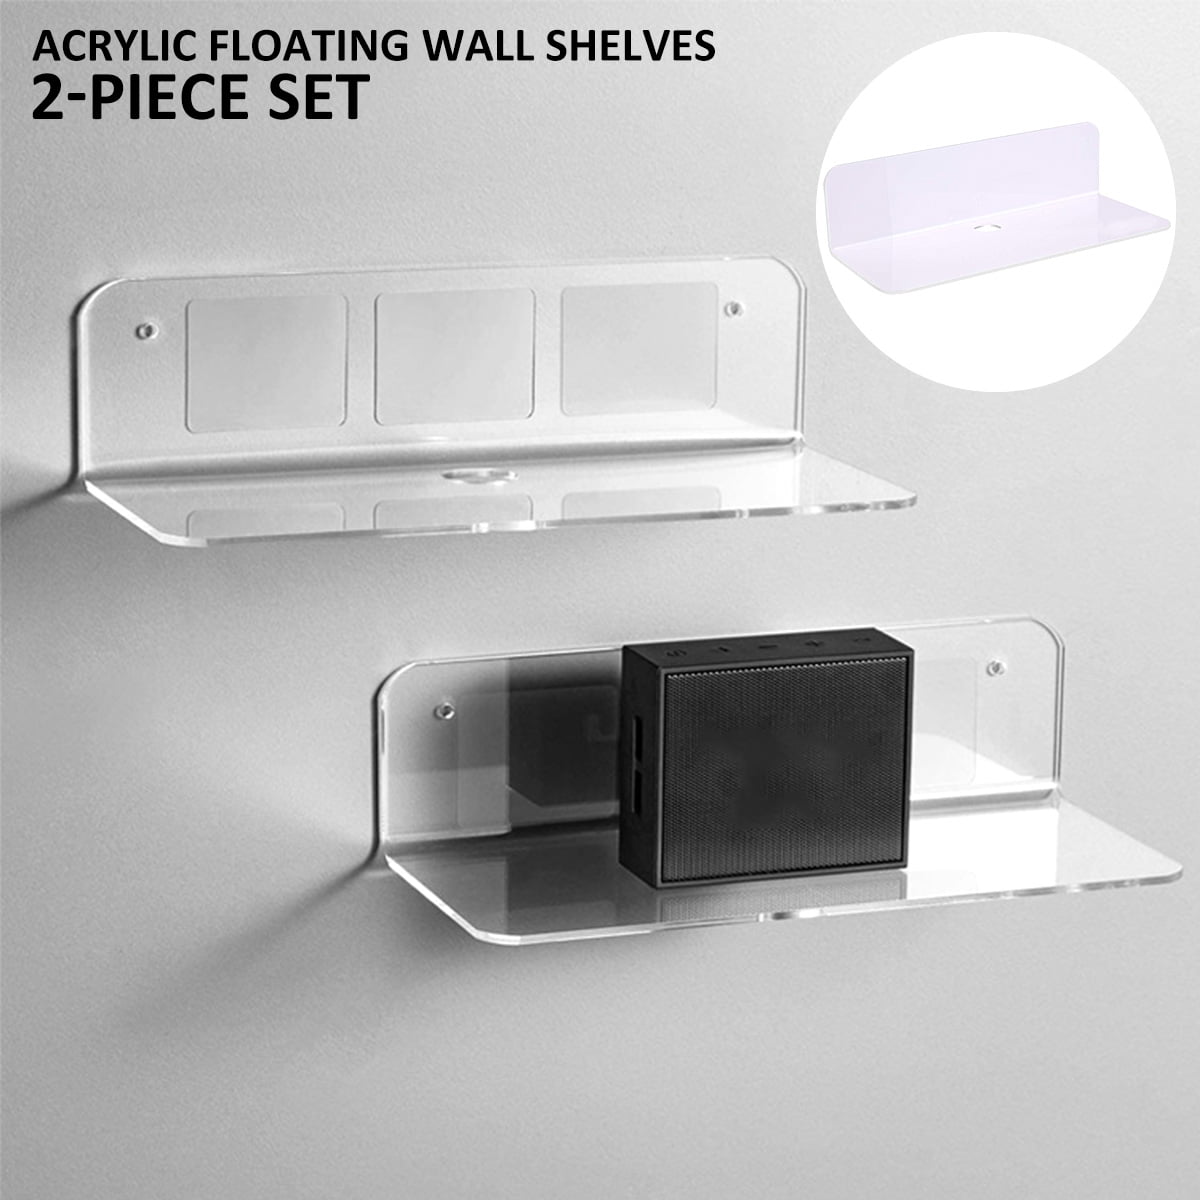 Acrylic Safety Shelf suitable for bathroom caravan kitchen office bedroom 